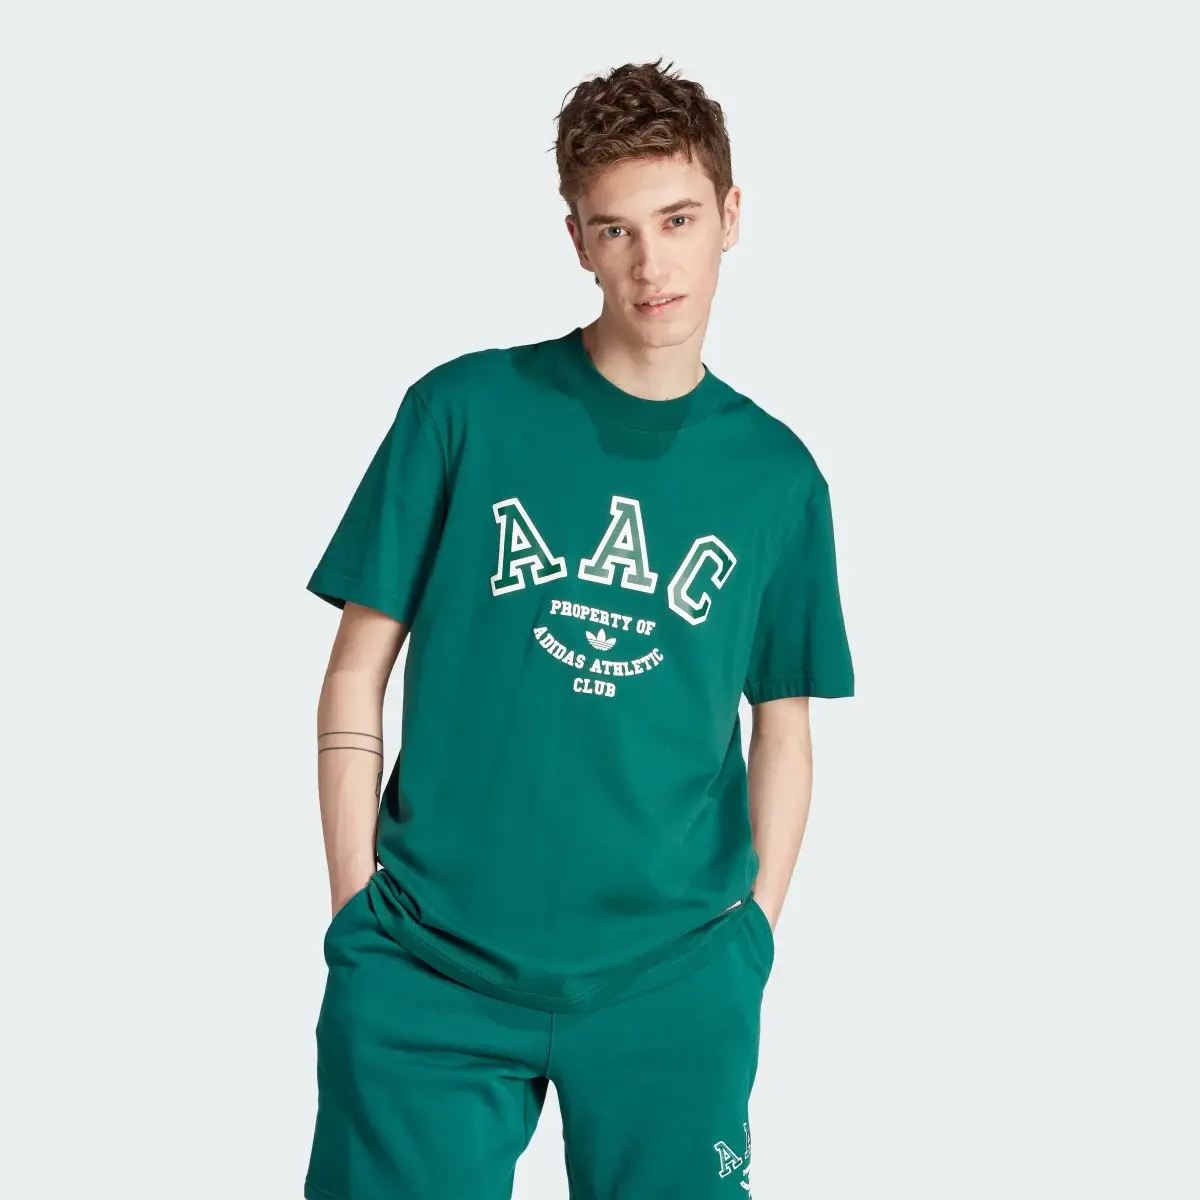 Adidas T-shirt Metro AAC adidas RIFTA. 2